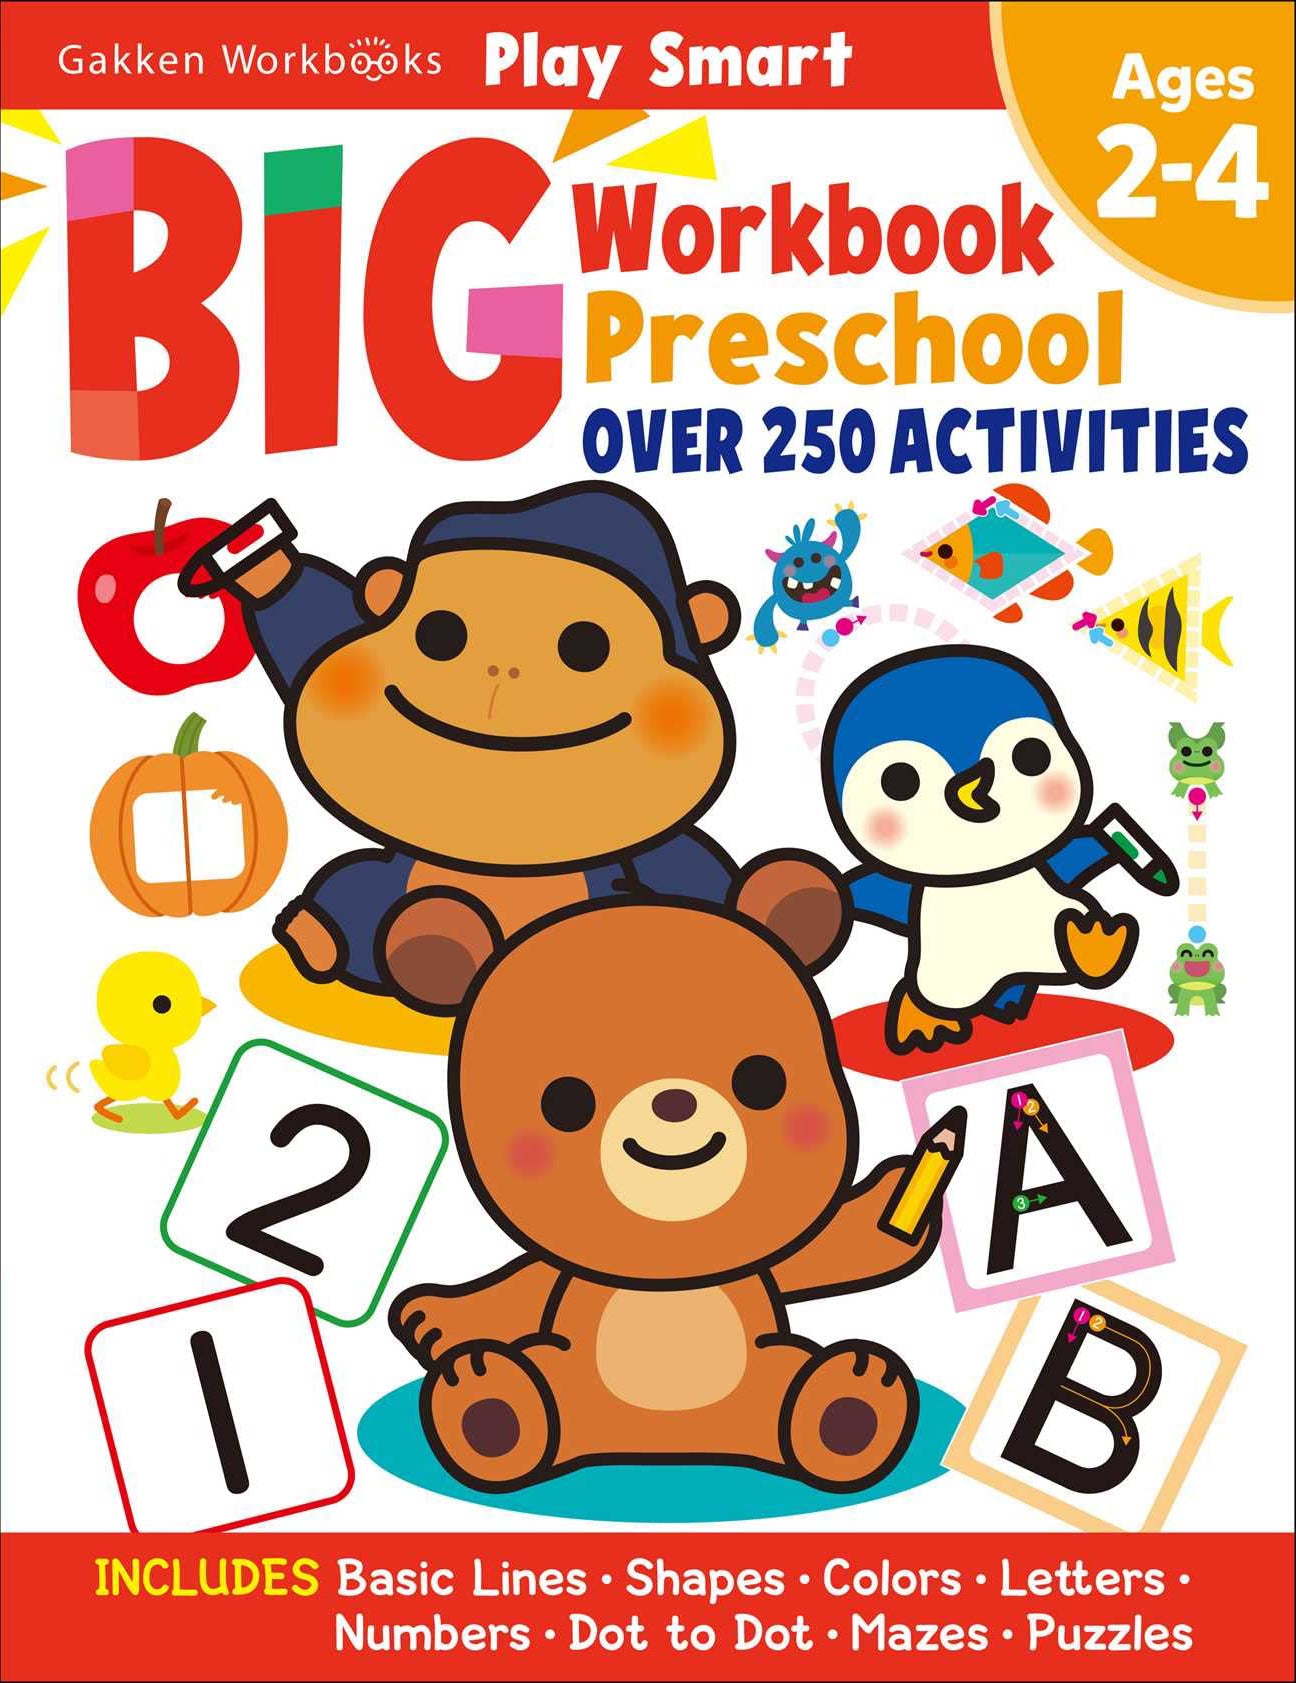 PLAY SMART Big Workbook Preschool 2-4 - _MS, EDUCATIONAL PUBLISHING HOUSE, PLAYSMART, PRESCHOOL